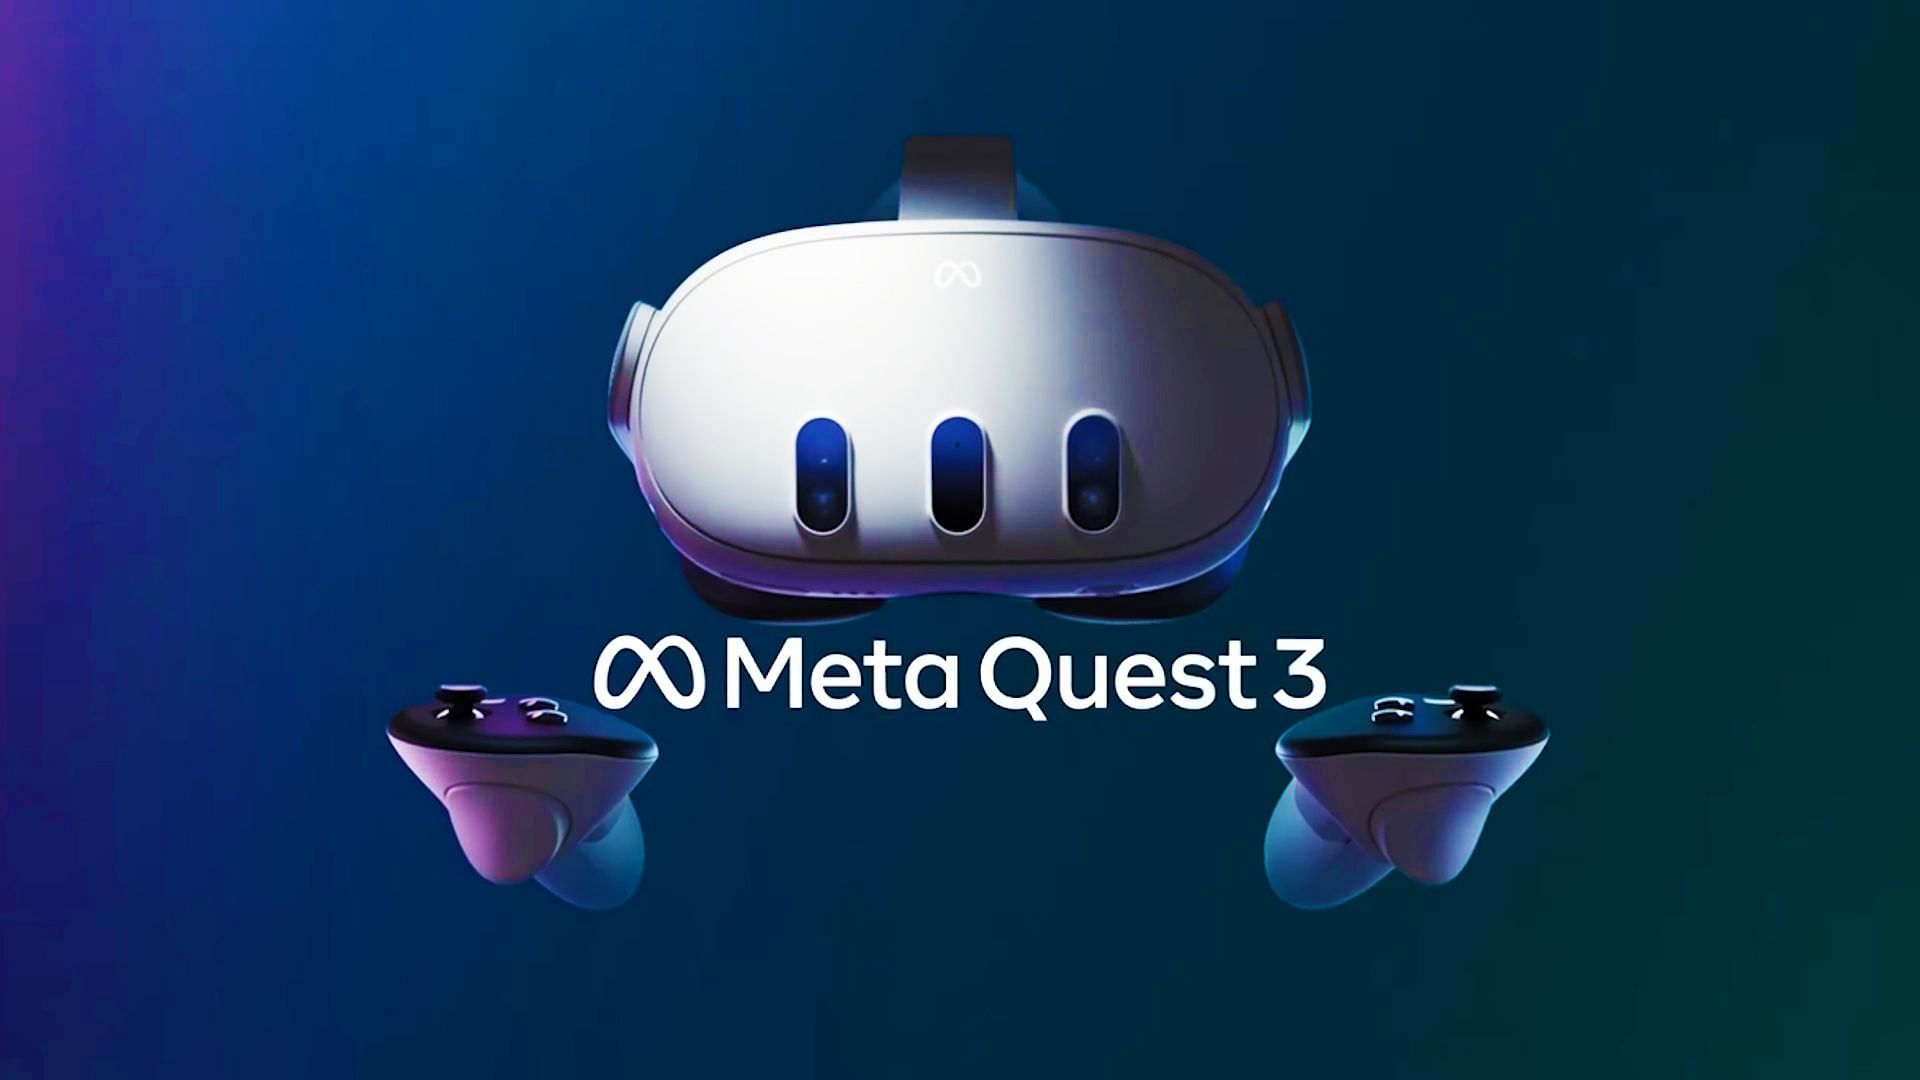 Meta Quest 3 VR headset release date, price, specs and more (Image via Sportskeeda)